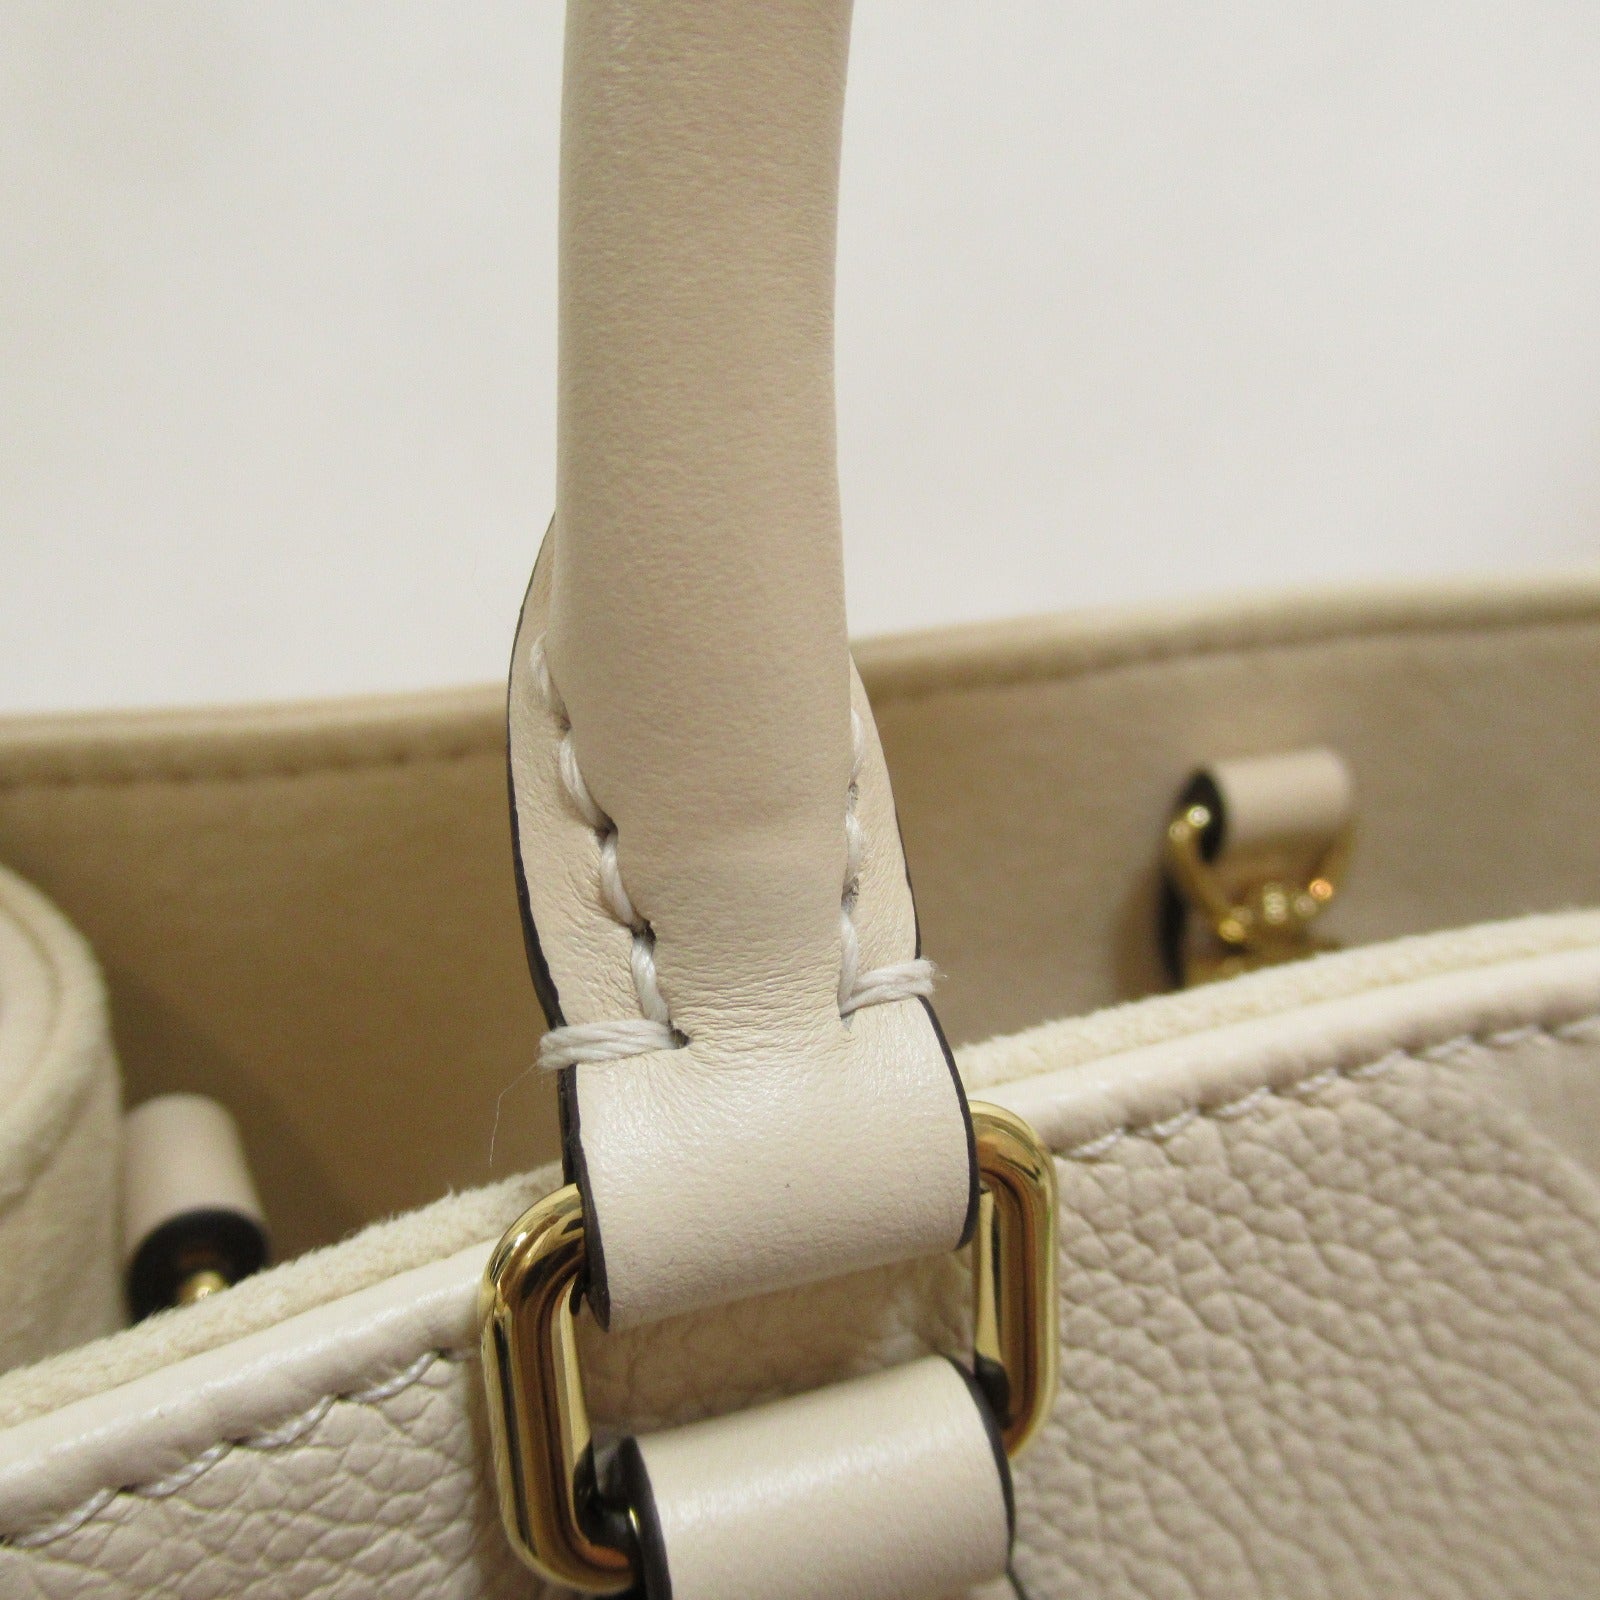 Louis Vuitton Louis Vuitton On The Gor PM Tote Bag 2w Shoulder Bag Leather Monogram Amplant  Ivory M46569